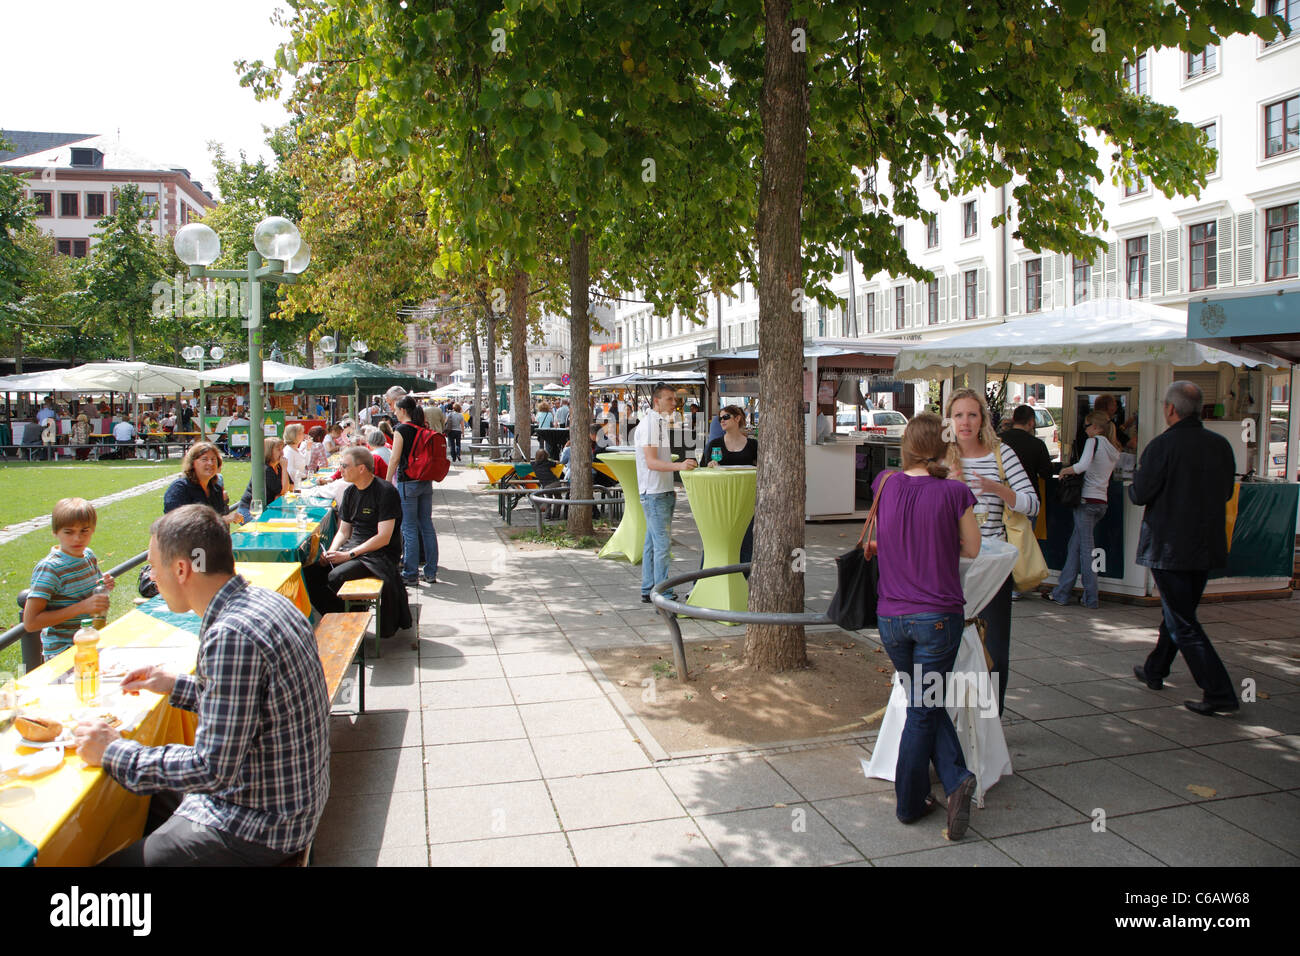 Wine fair, Marktplatz, Wiesbaden, Germany Stock Photo